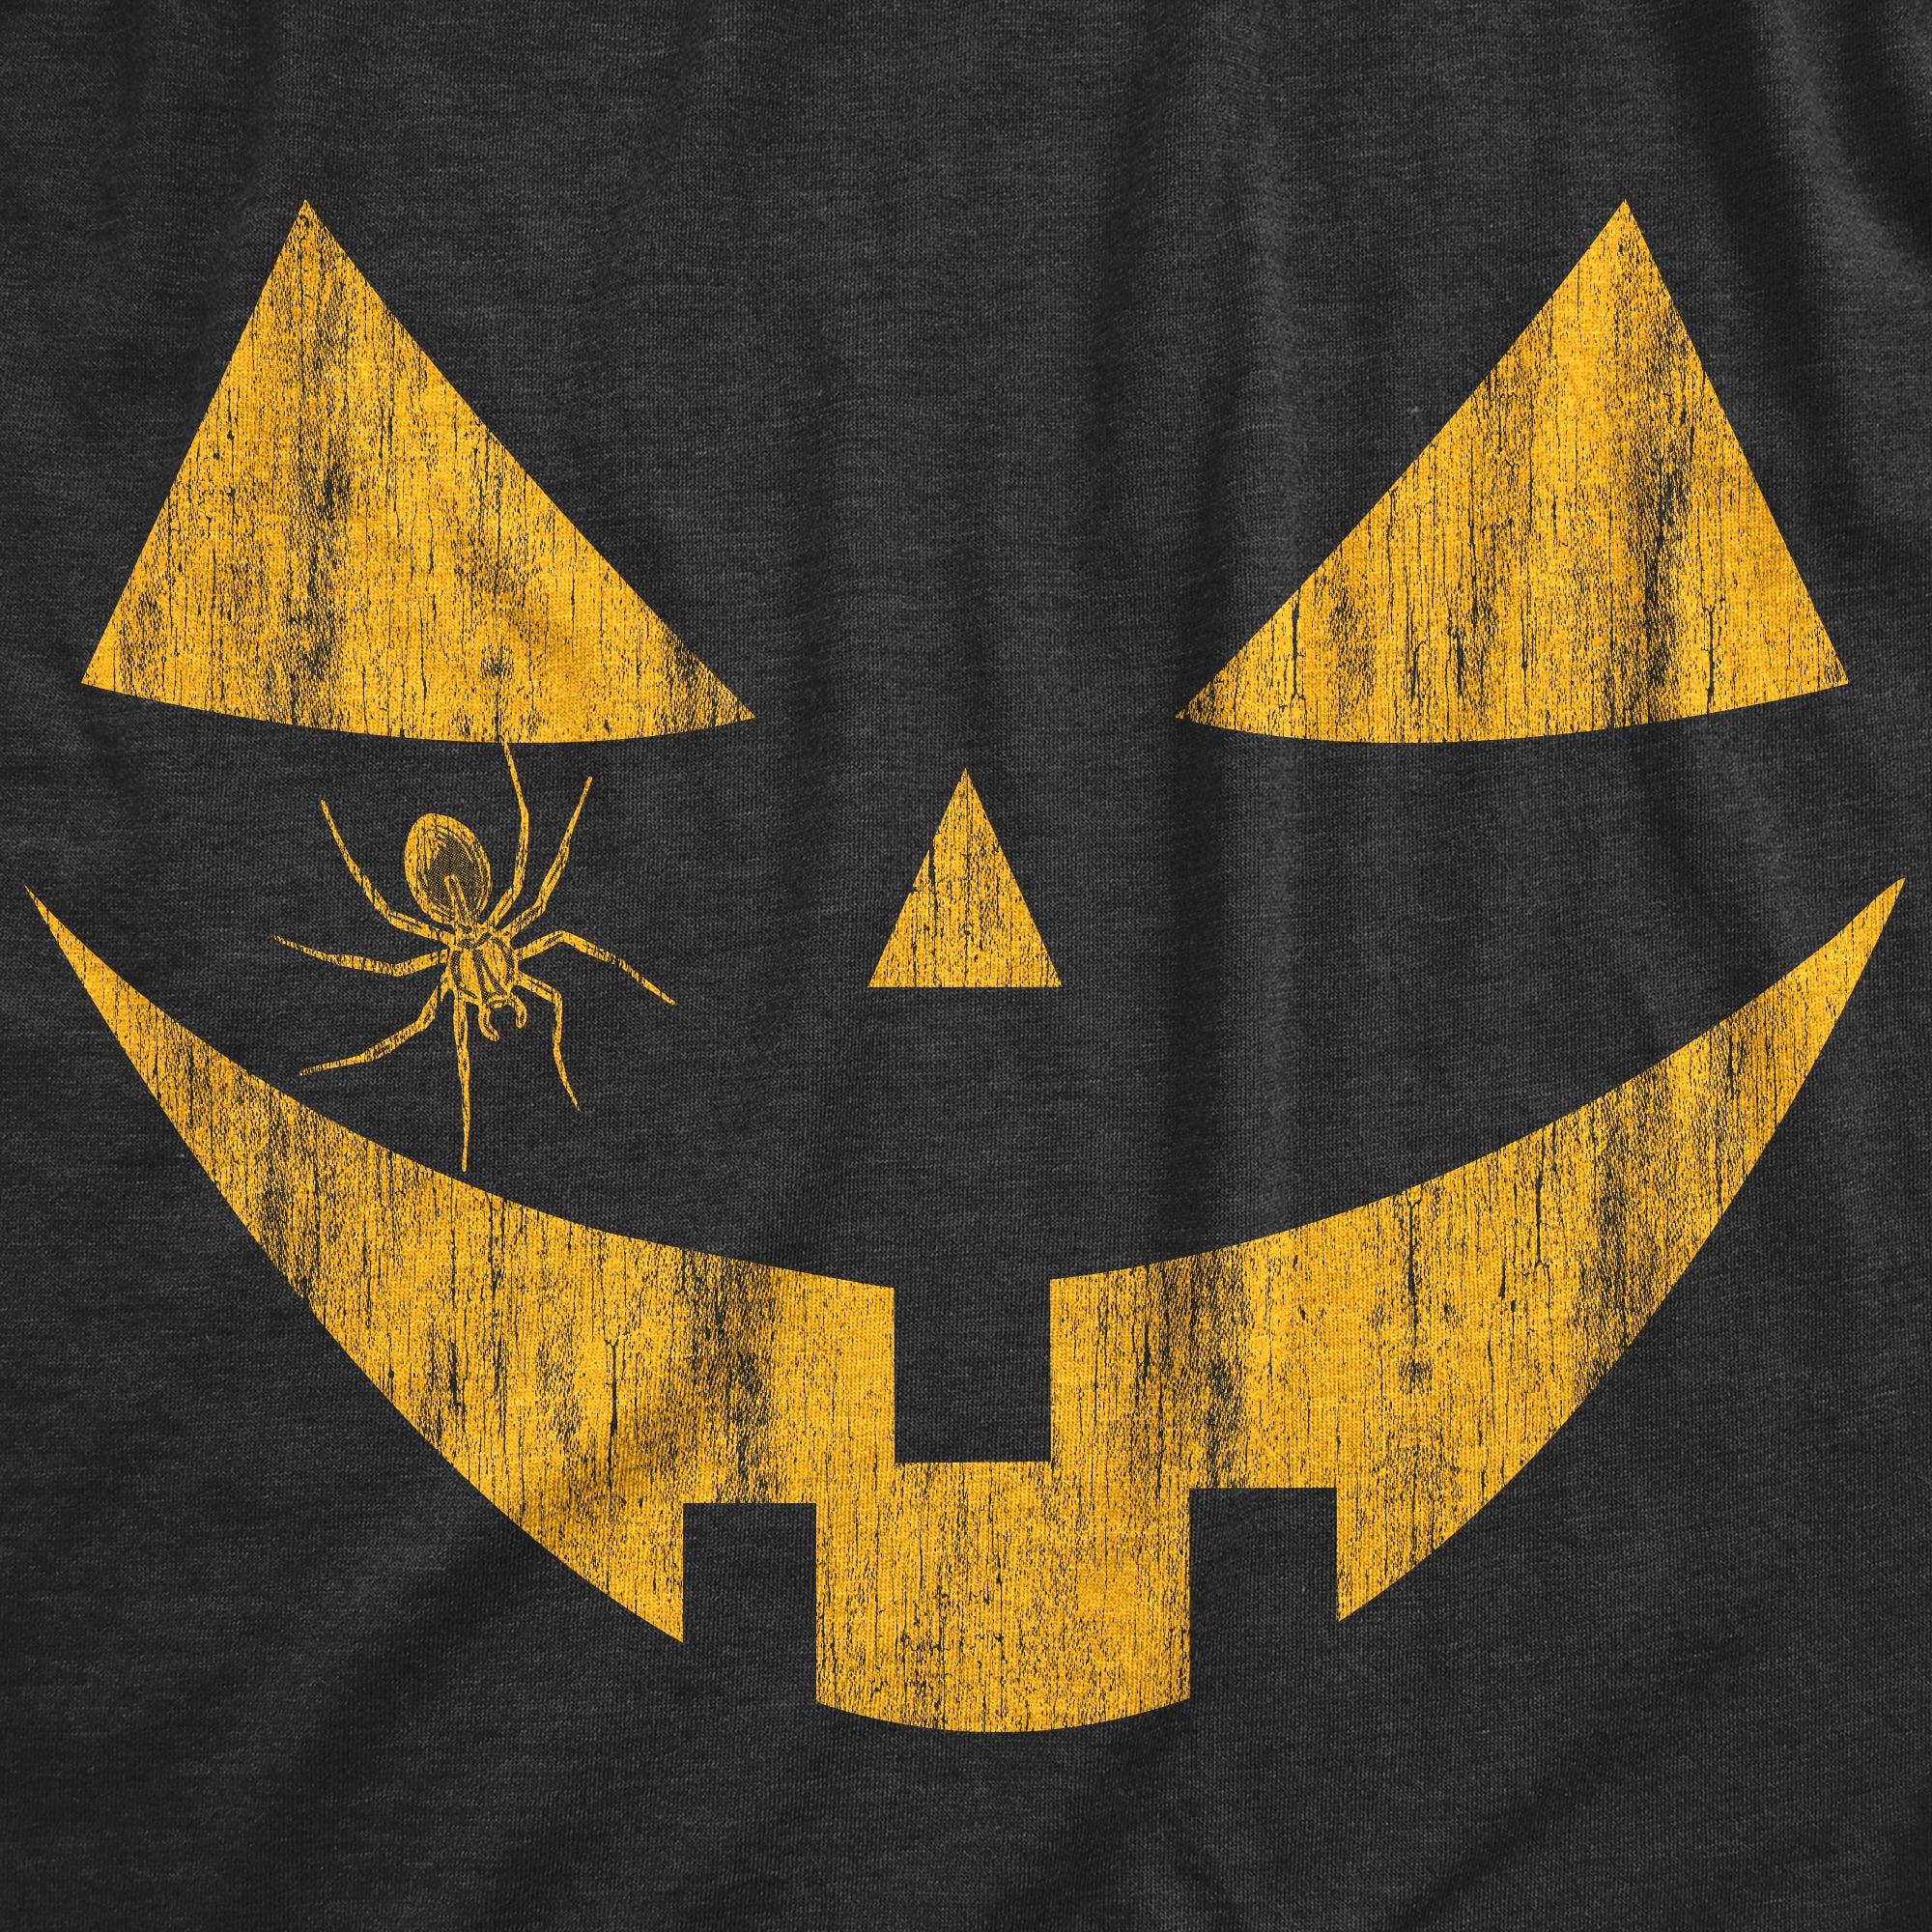 Funny Heather Black - STAN Spider Stan Mens T Shirt Nerdy Halloween Tee